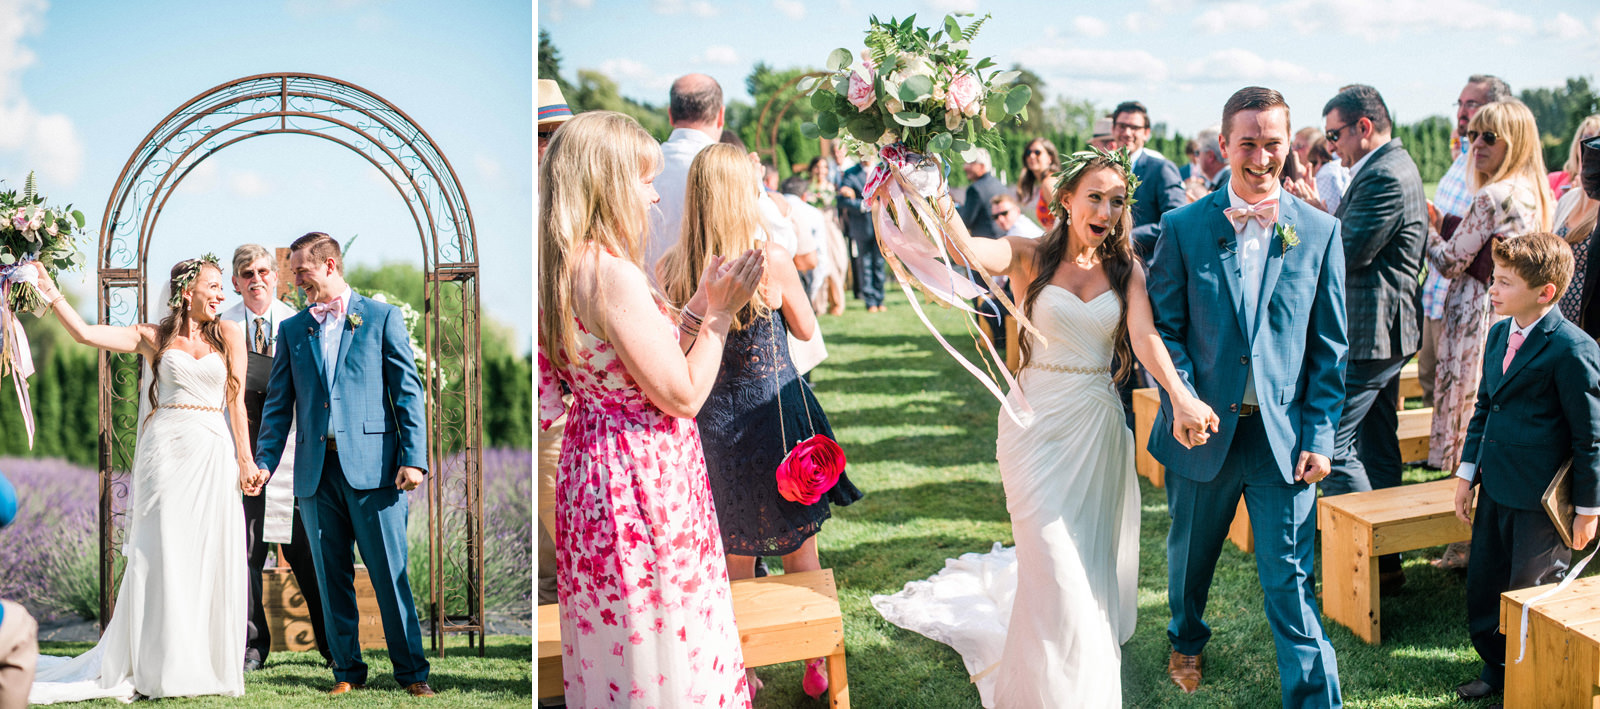 047-woodinville-lavendar-farm-wedding-with-golden-glowy-photos.jpg